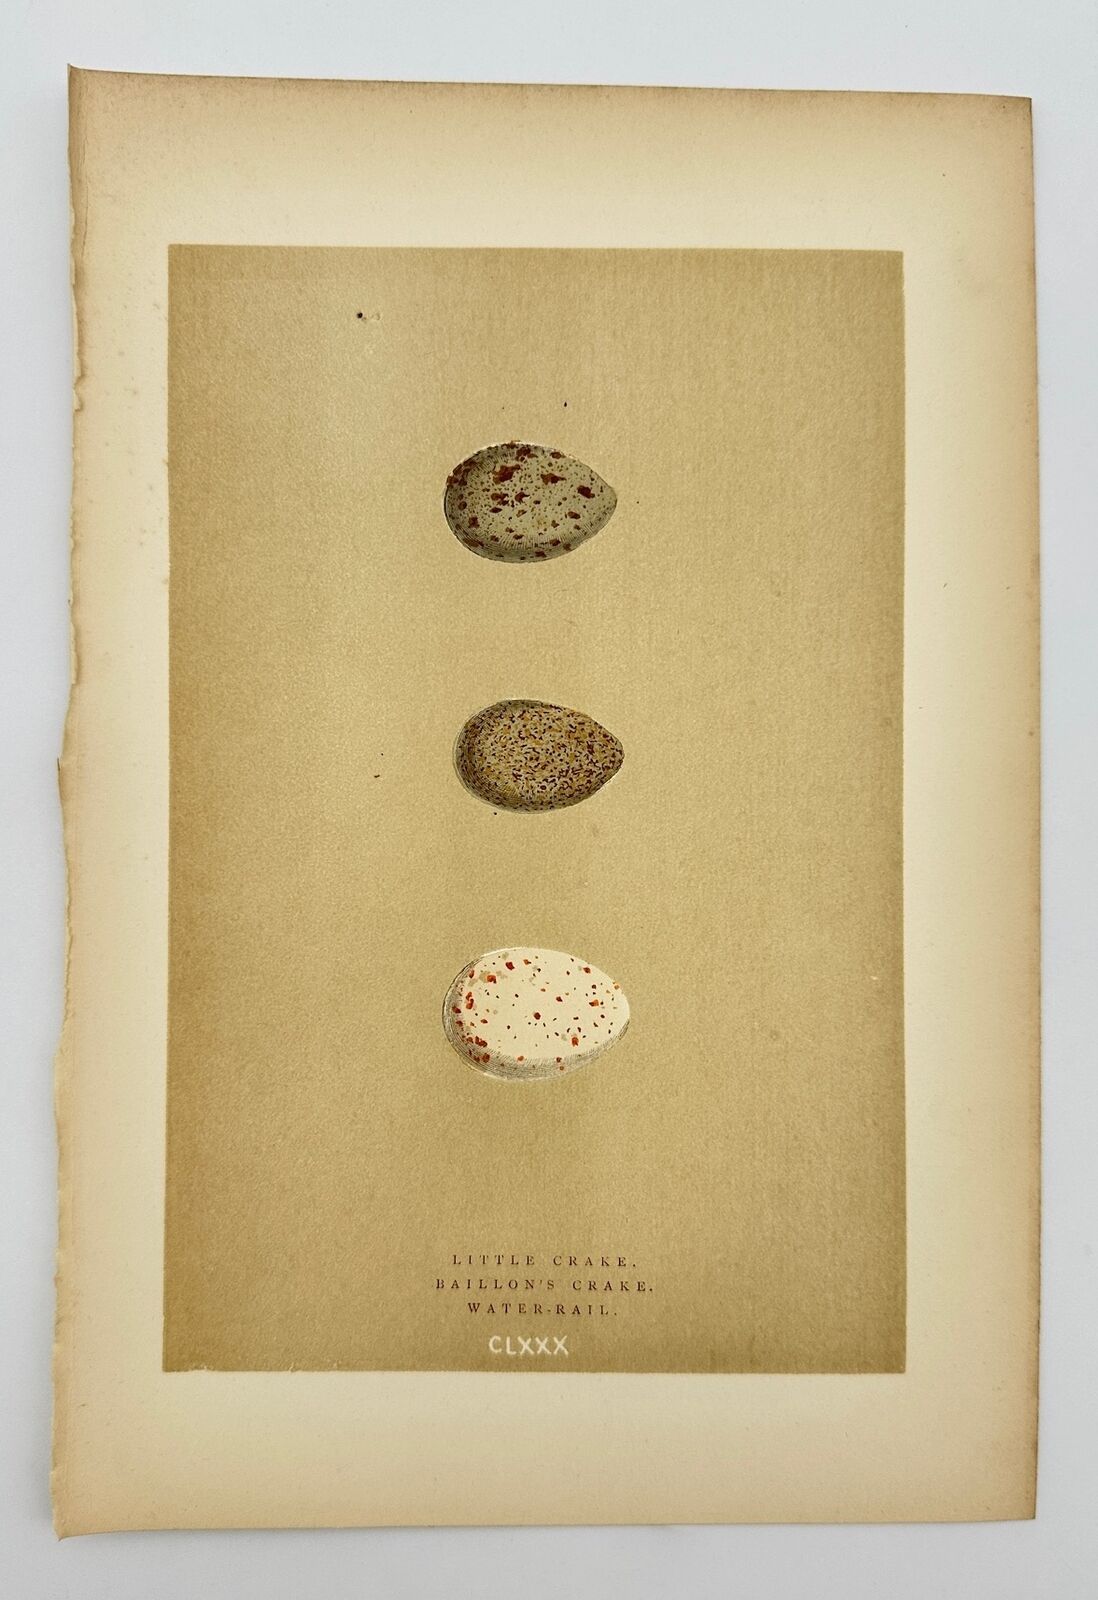 Antique Bird Egg Print - Baillon's Crake - Water Rail - Little Crake - F2